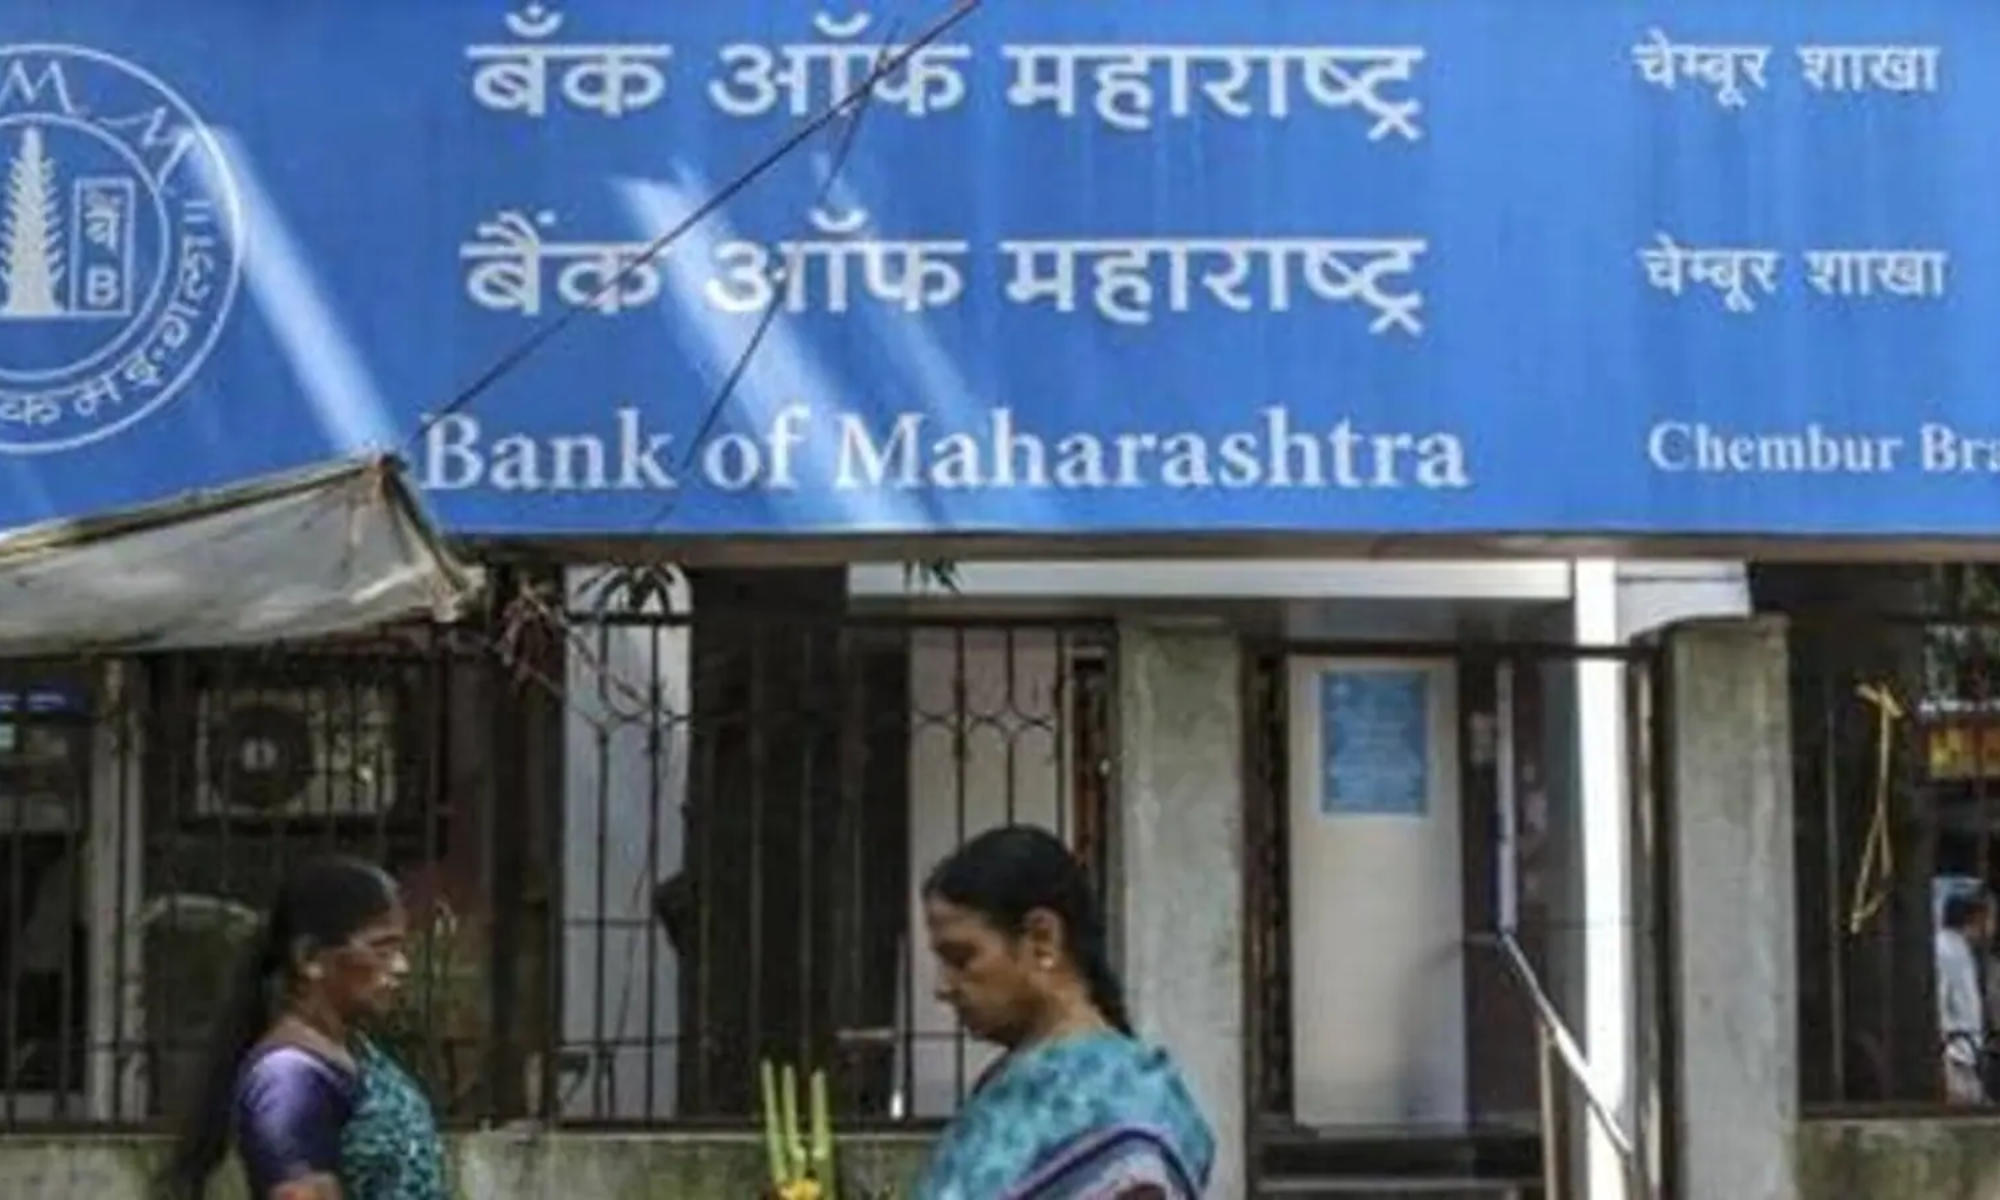 Bonds help the Bank of Maharashtra raise $710 million